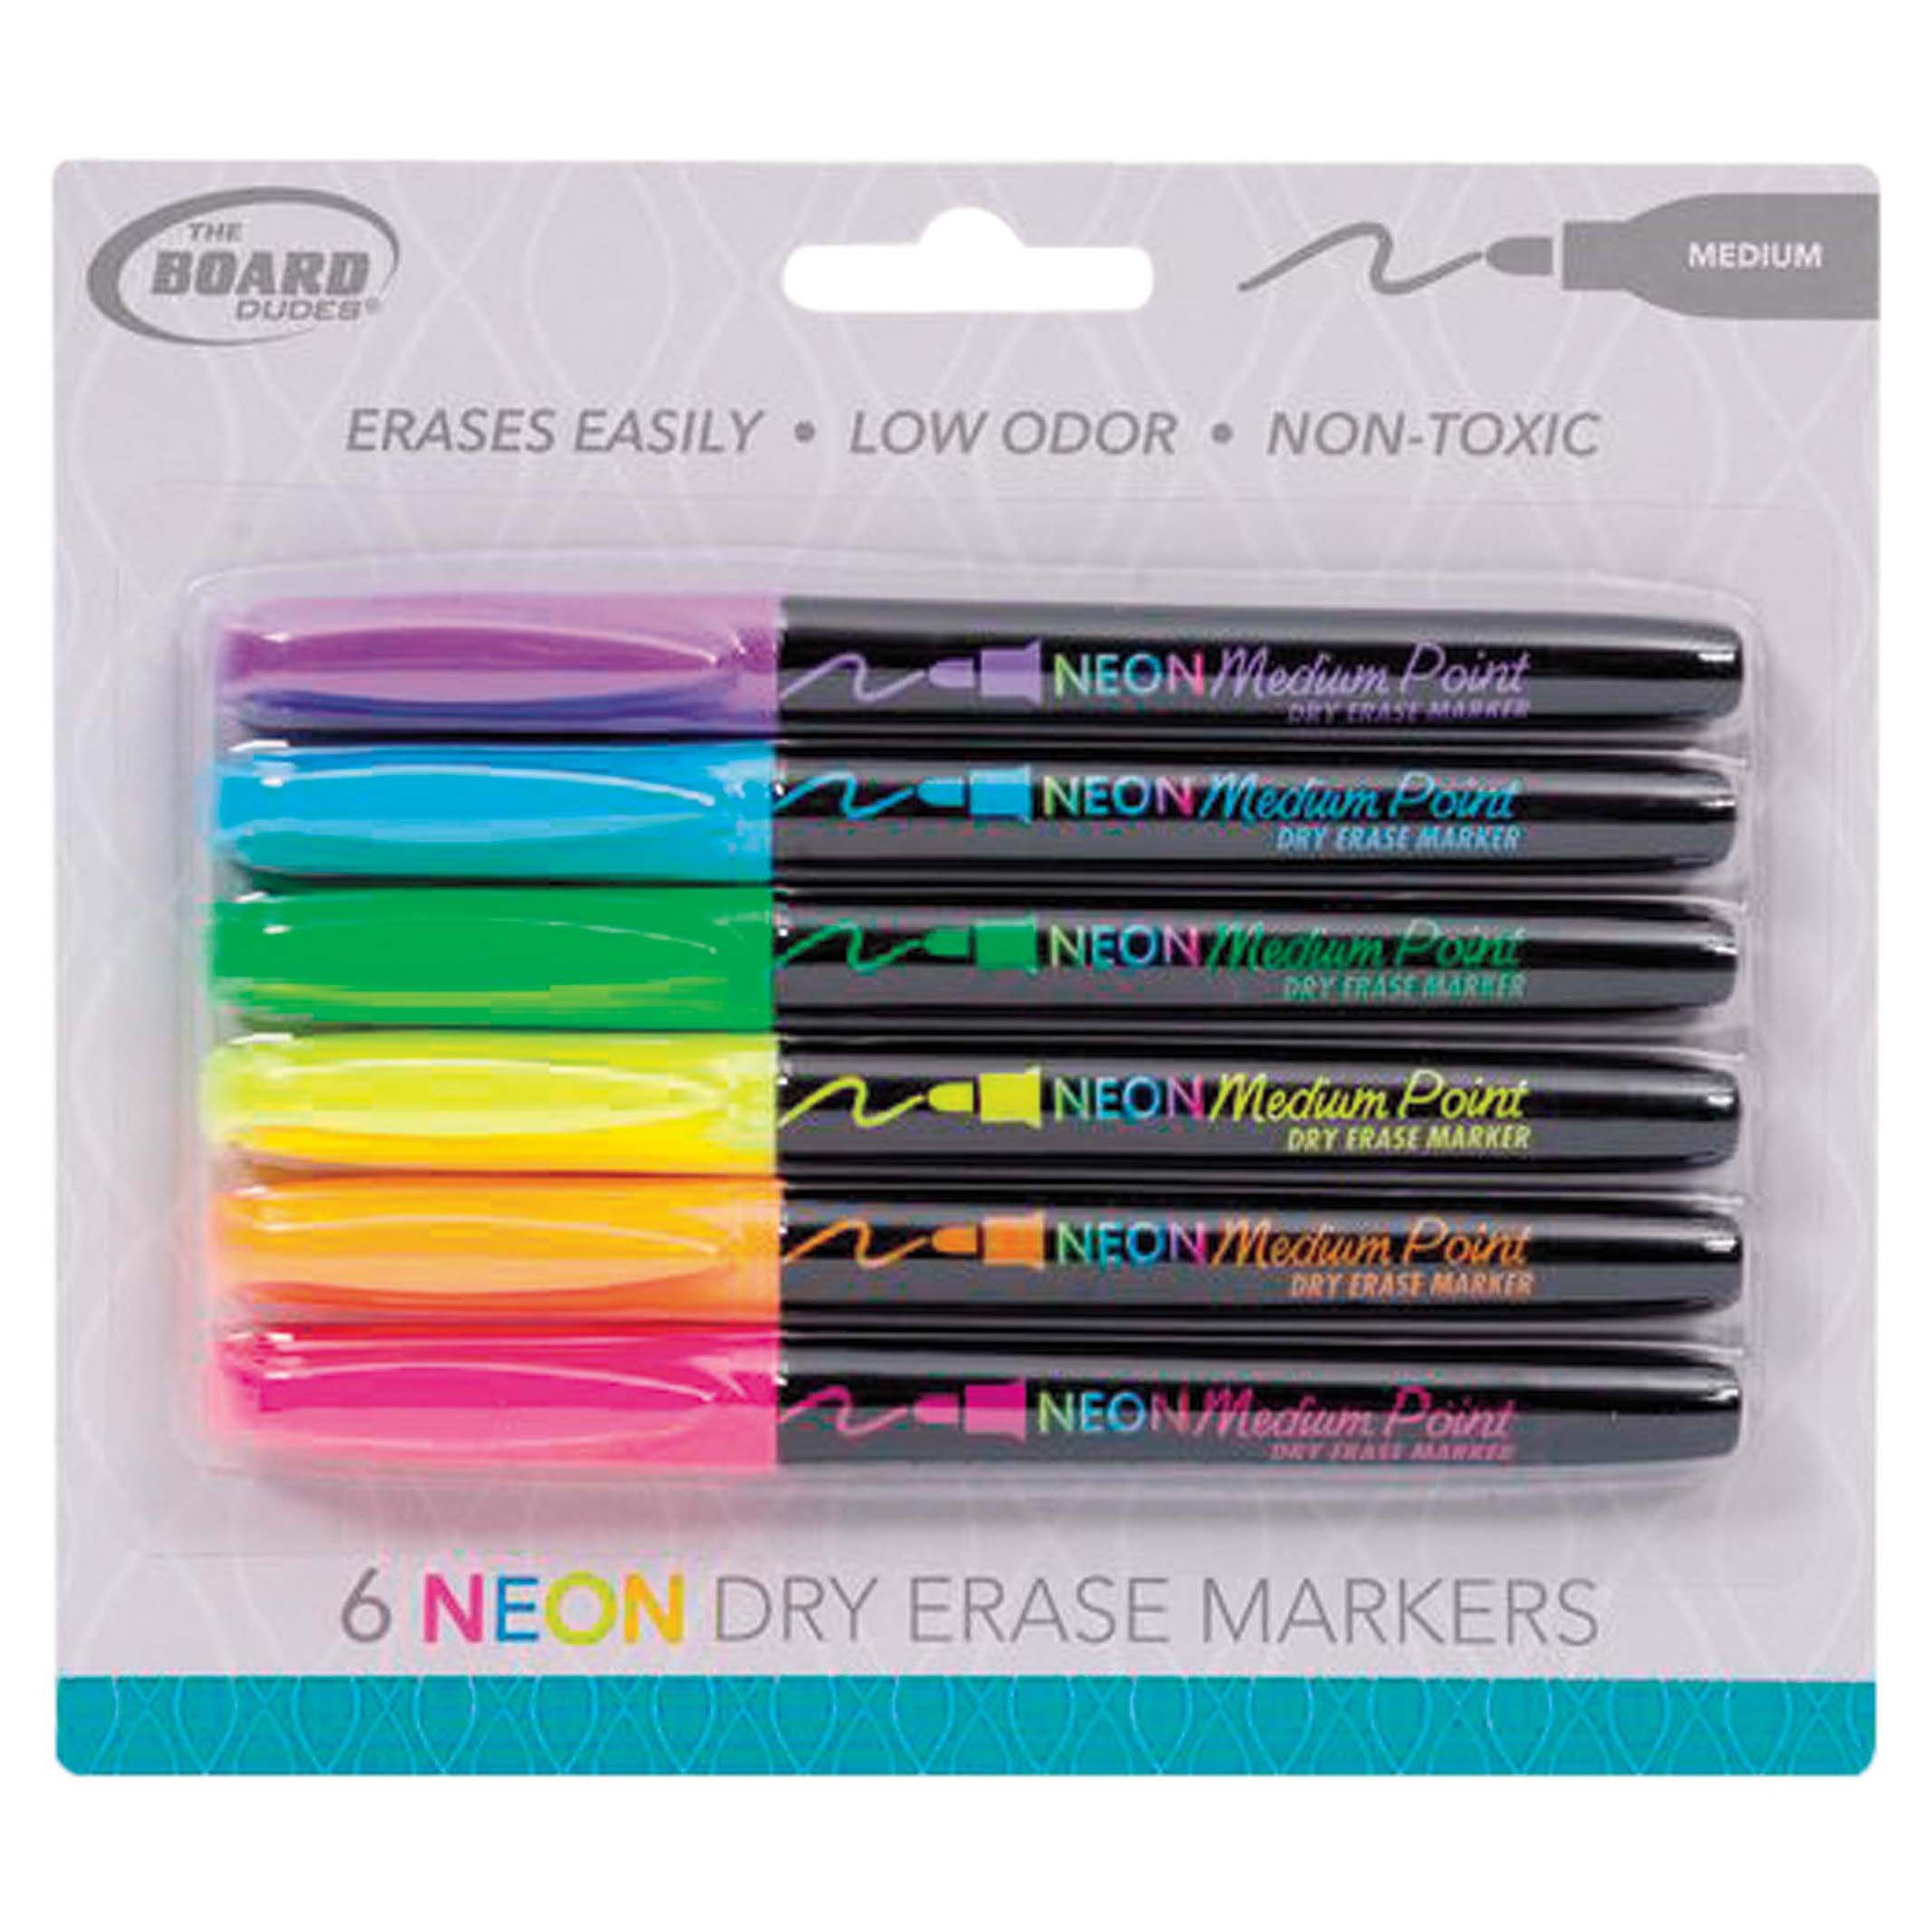 Replying to @．*．𝓂𝒾𝓁𝒶．*． Neons! 💛💚🩵 #dryerase #dryerasetok #rati, Dry Erase Markers Review